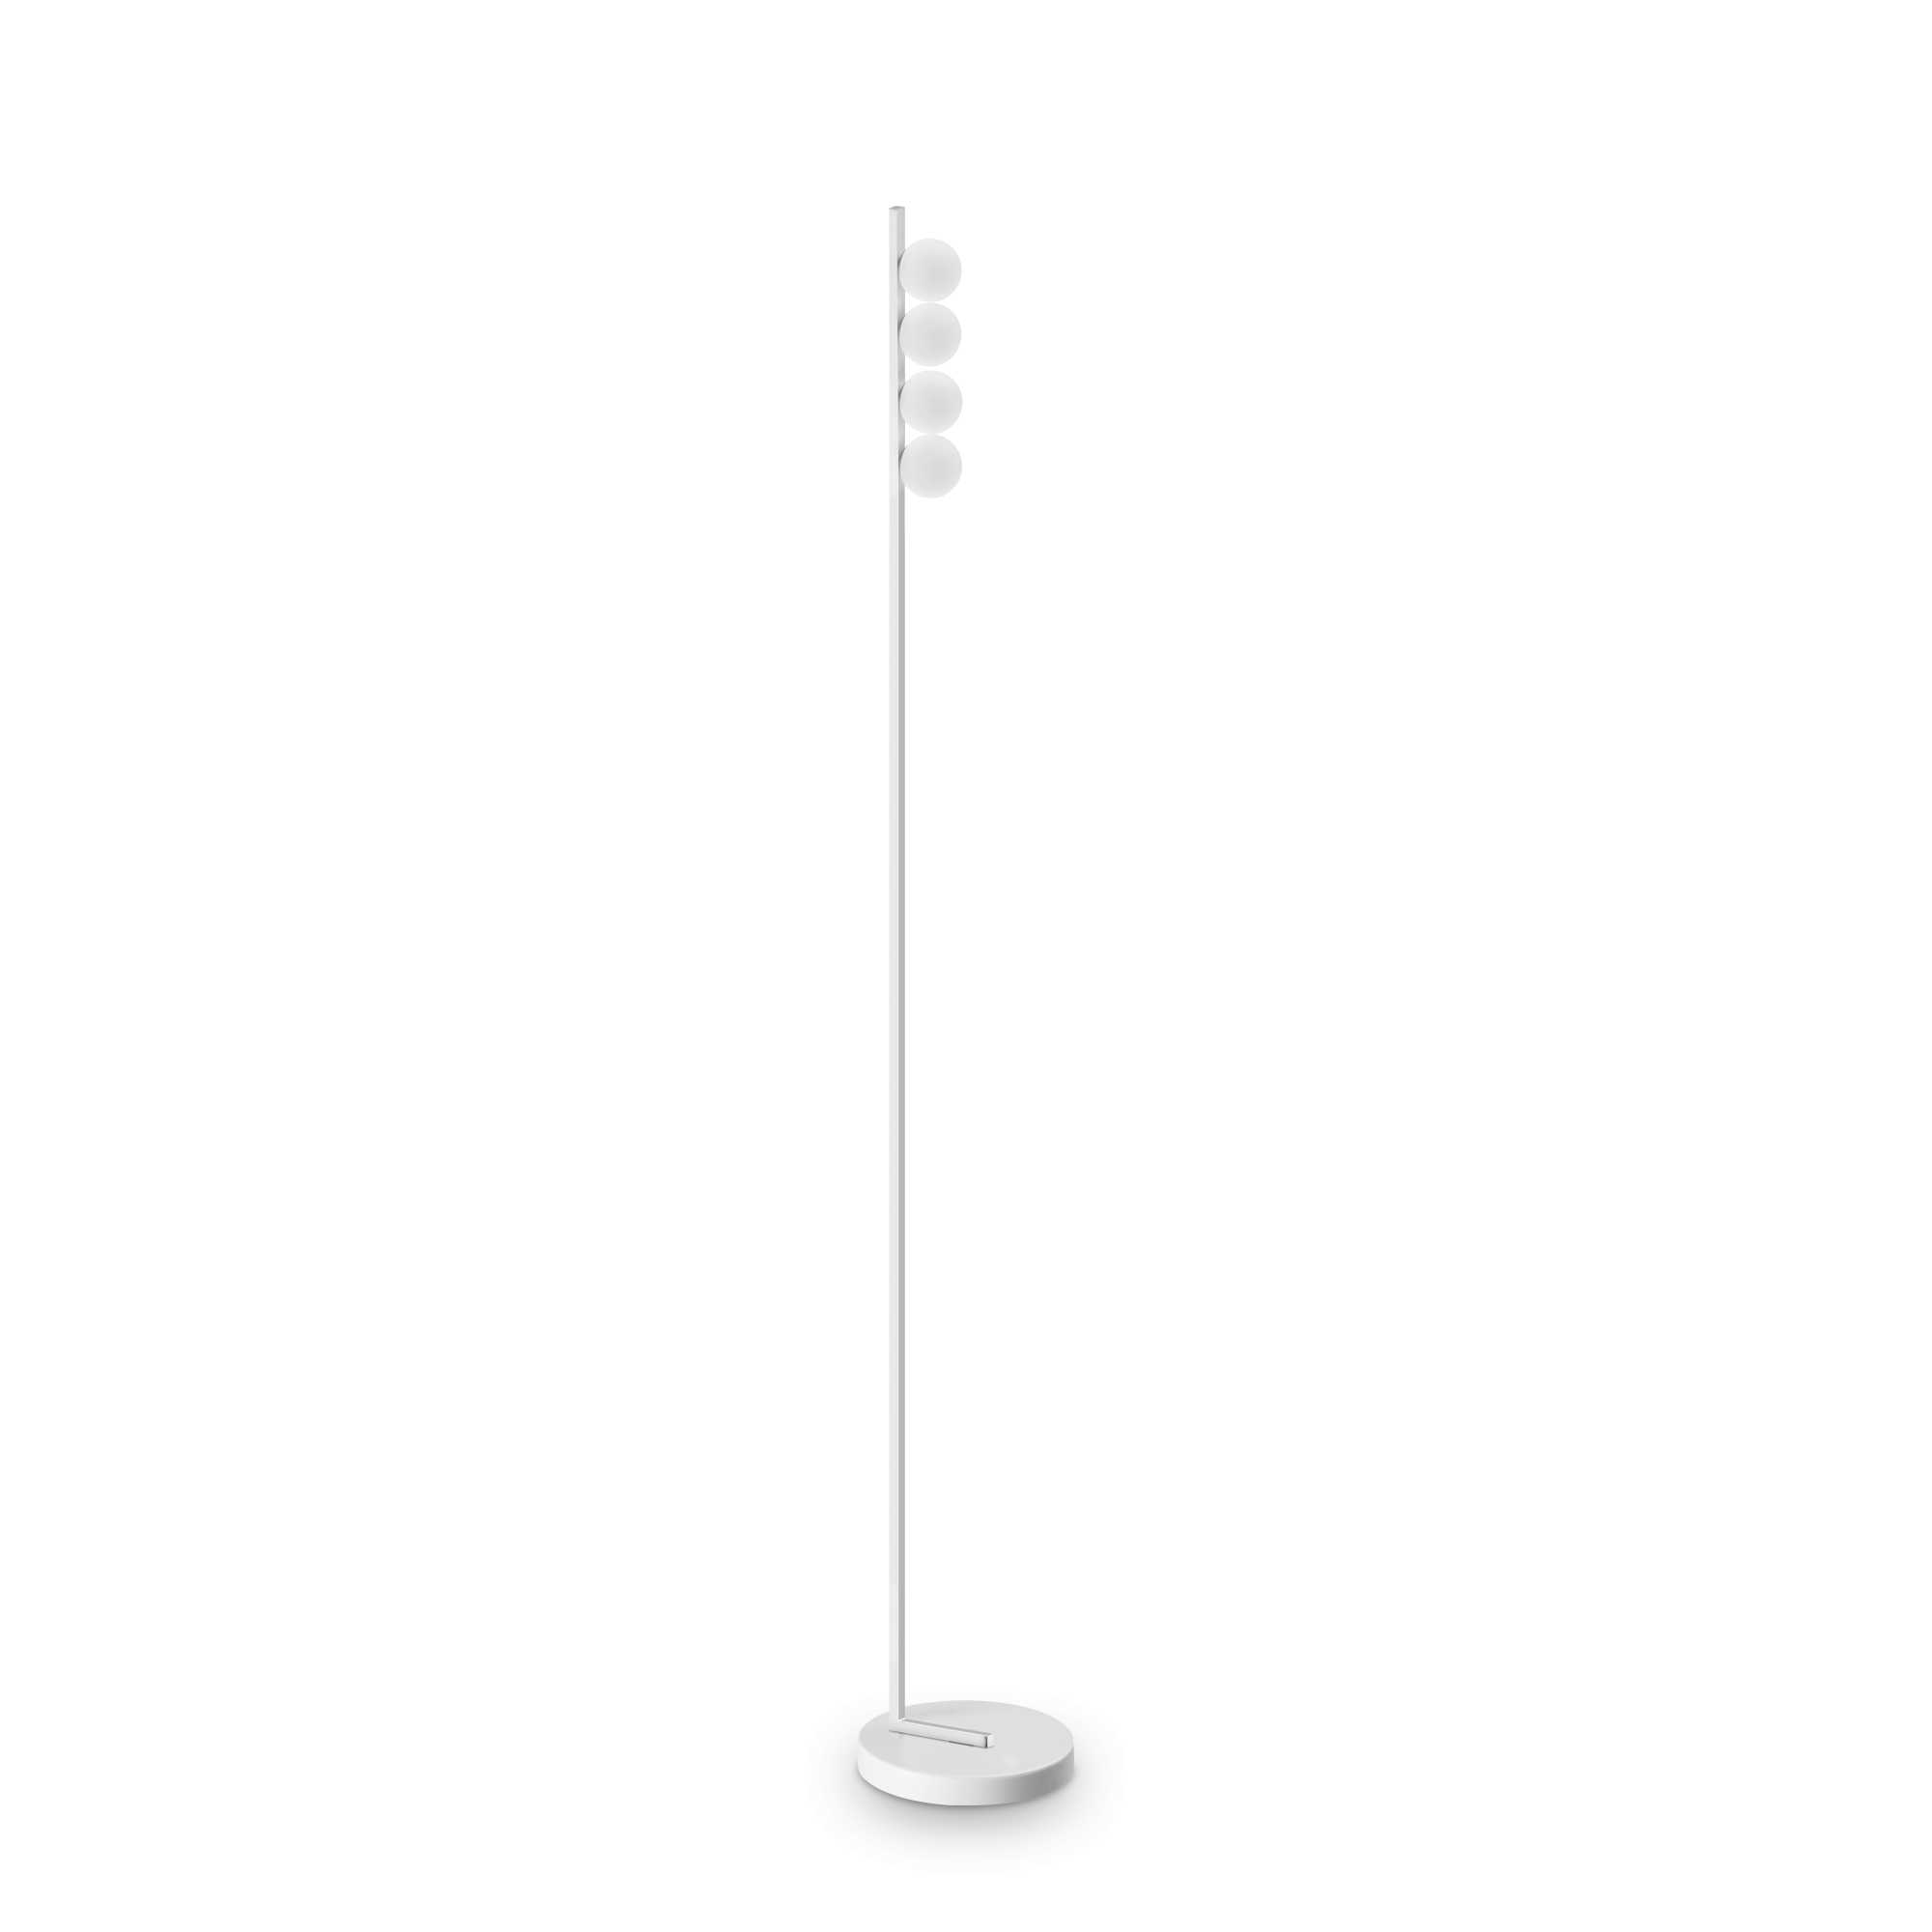 AD hotelska oprema Podna lampa Ping pong pt4- Bijele boje slika proizvoda